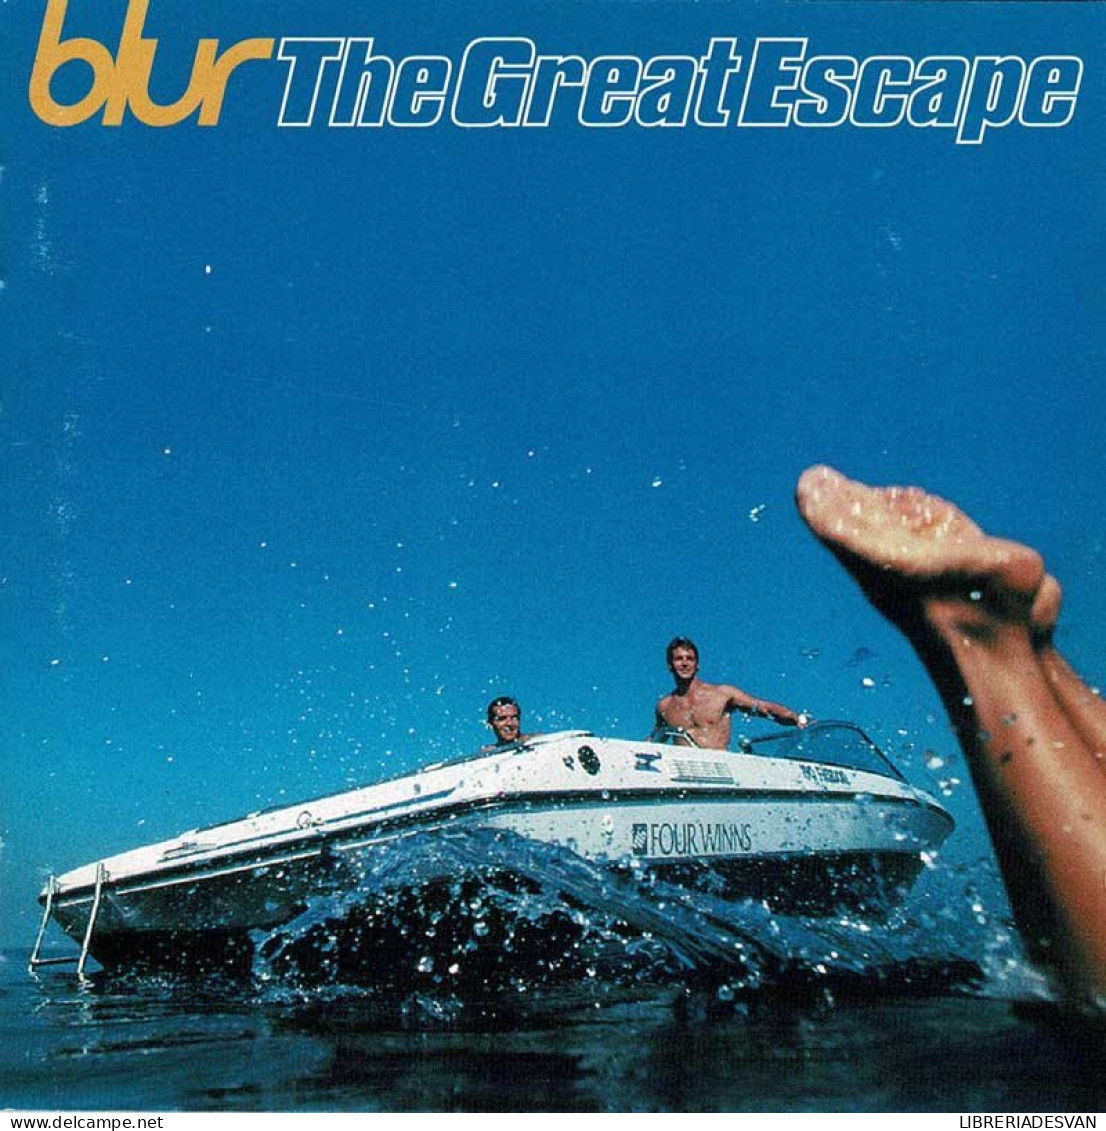 Blur - The Great Escape. CD - Rock